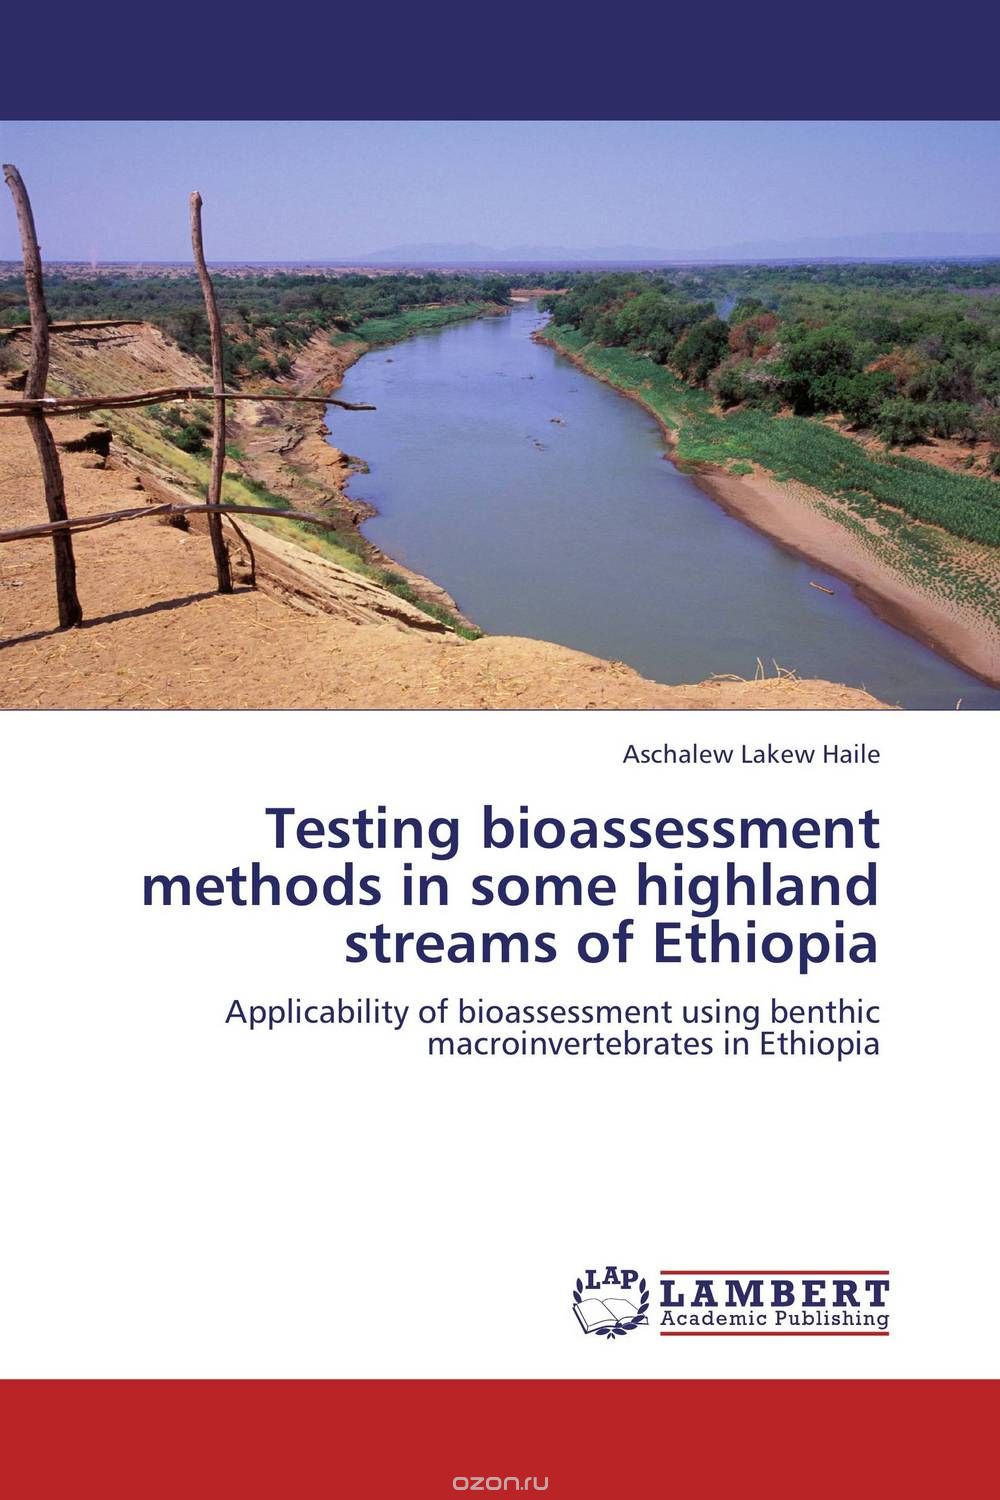 Скачать книгу "Testing bioassessment methods in some highland streams of Ethiopia"